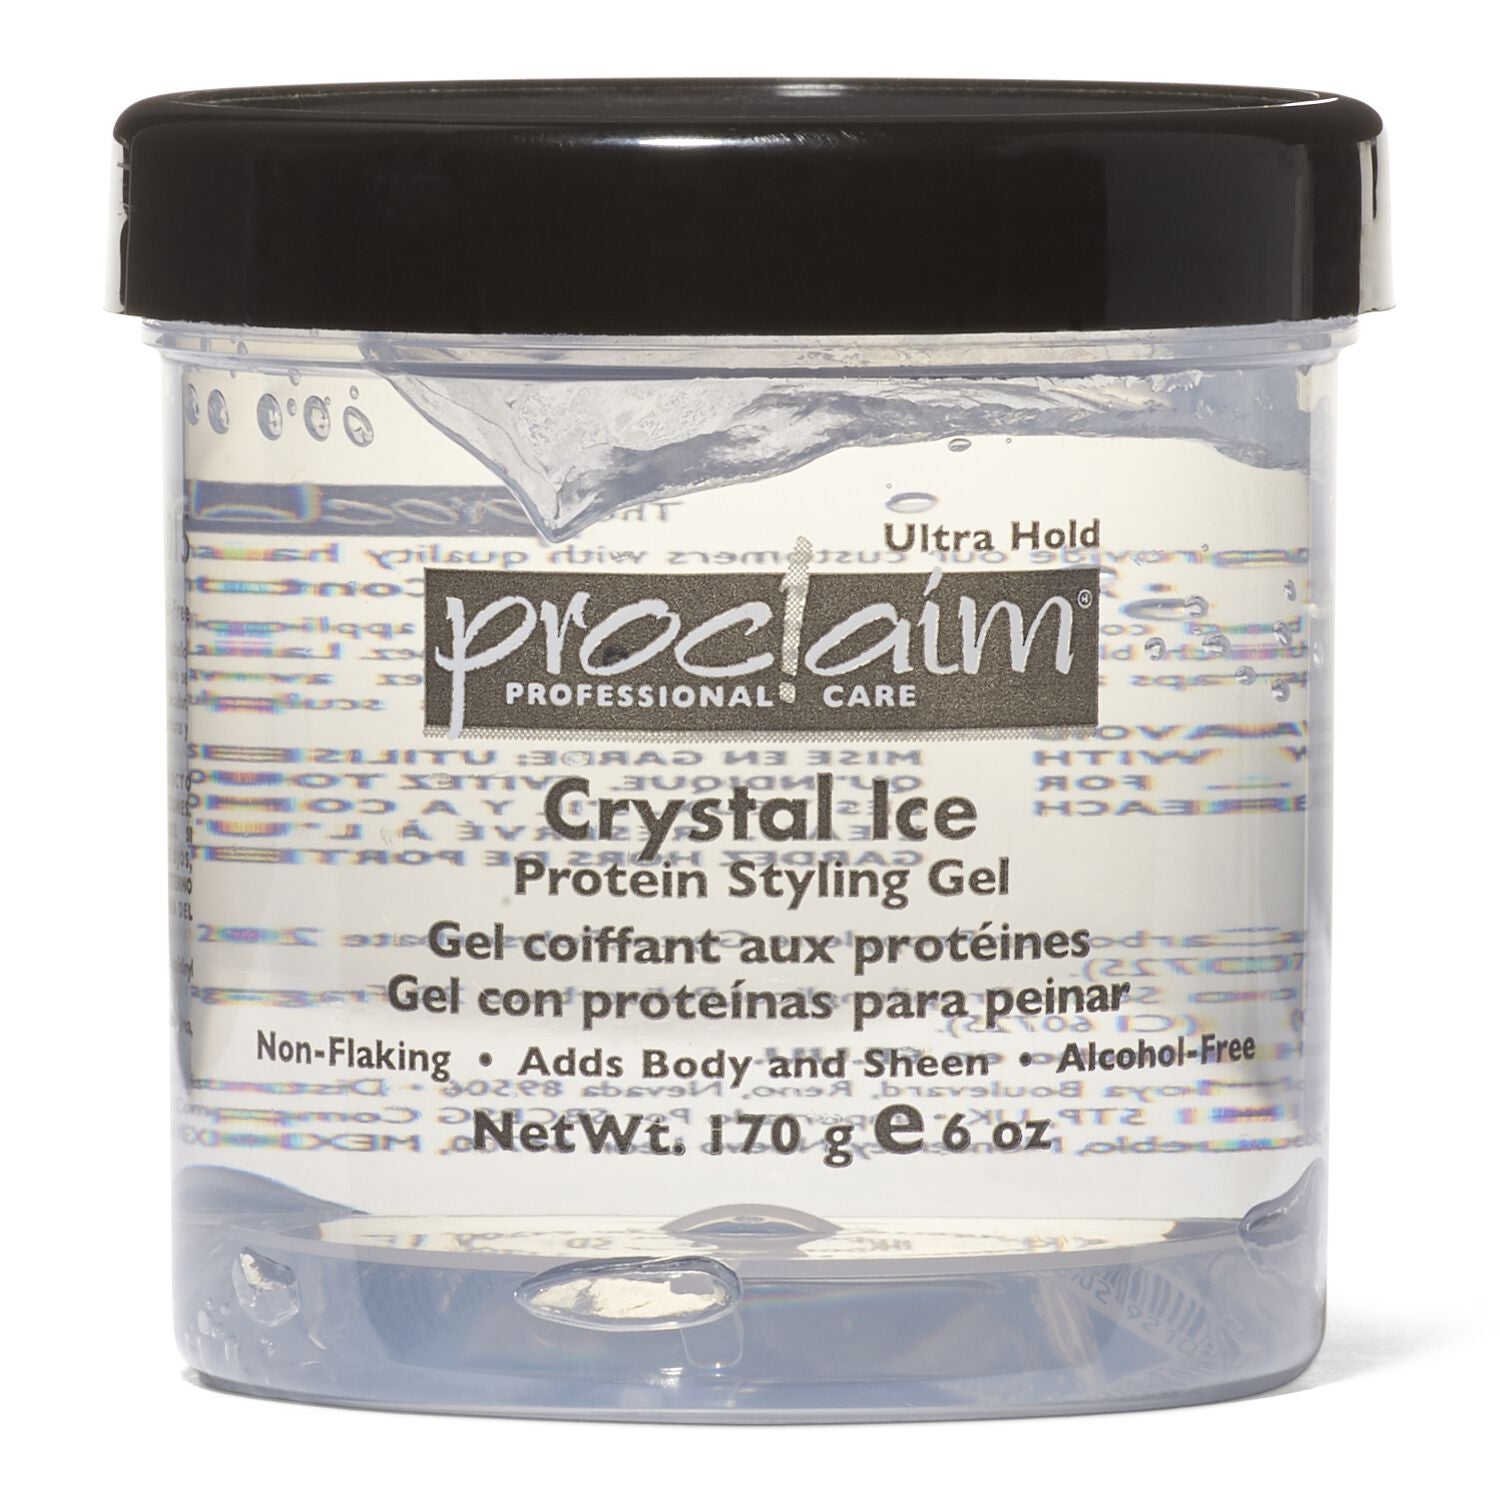 Proclaim Crystal Ice Protein Styling Gel